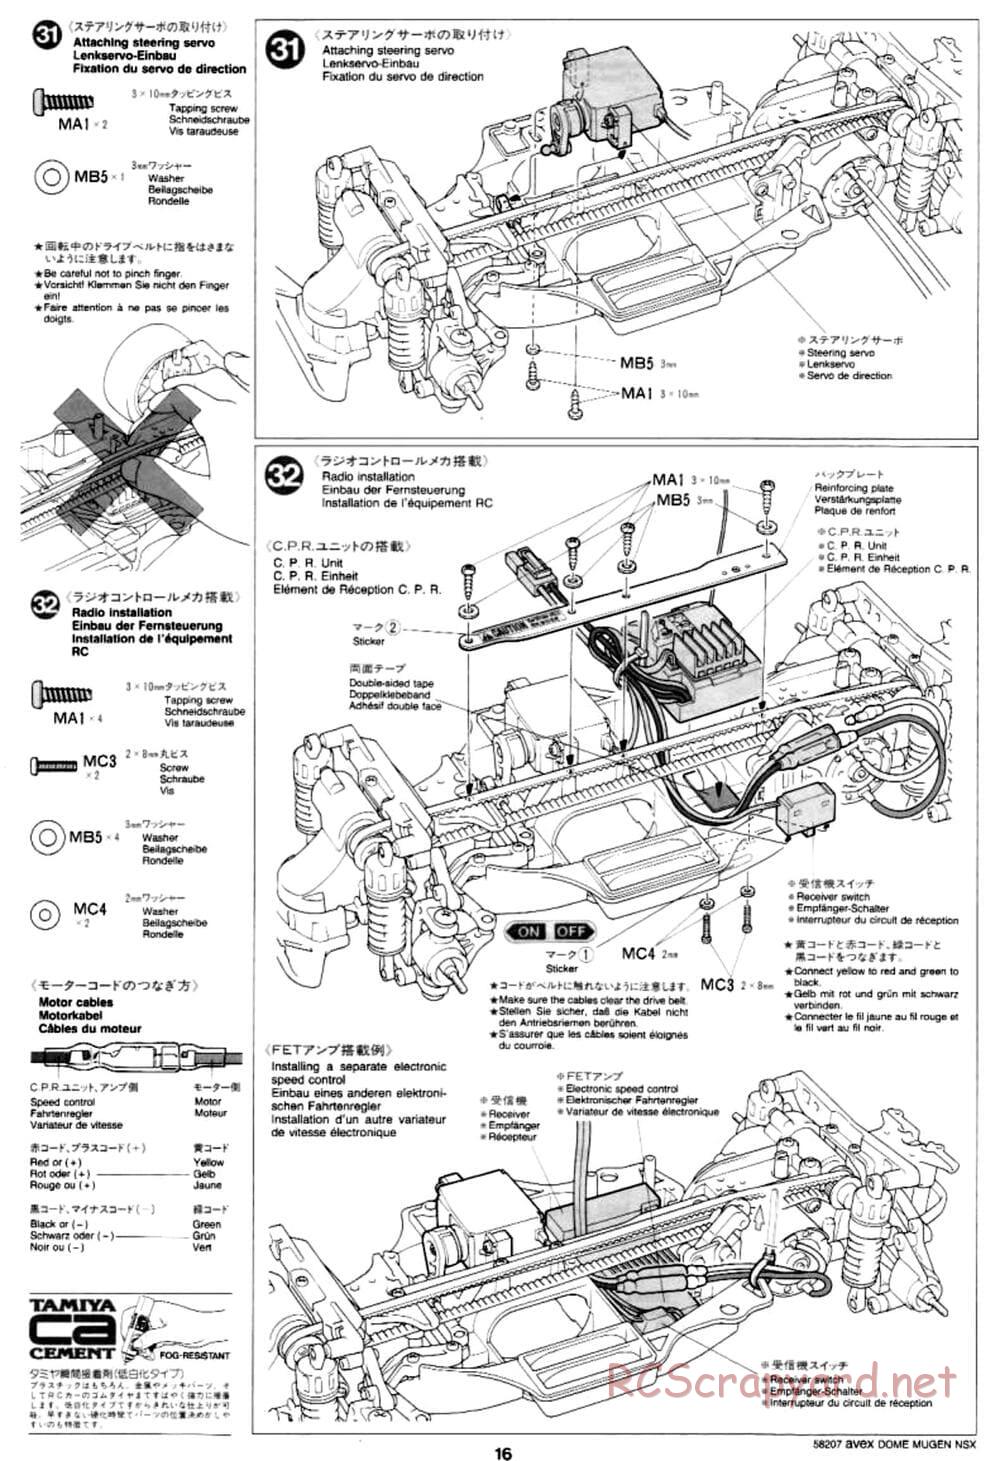 Tamiya - Avex Dome Mugen NSX - TA-03R Chassis - Manual - Page 16